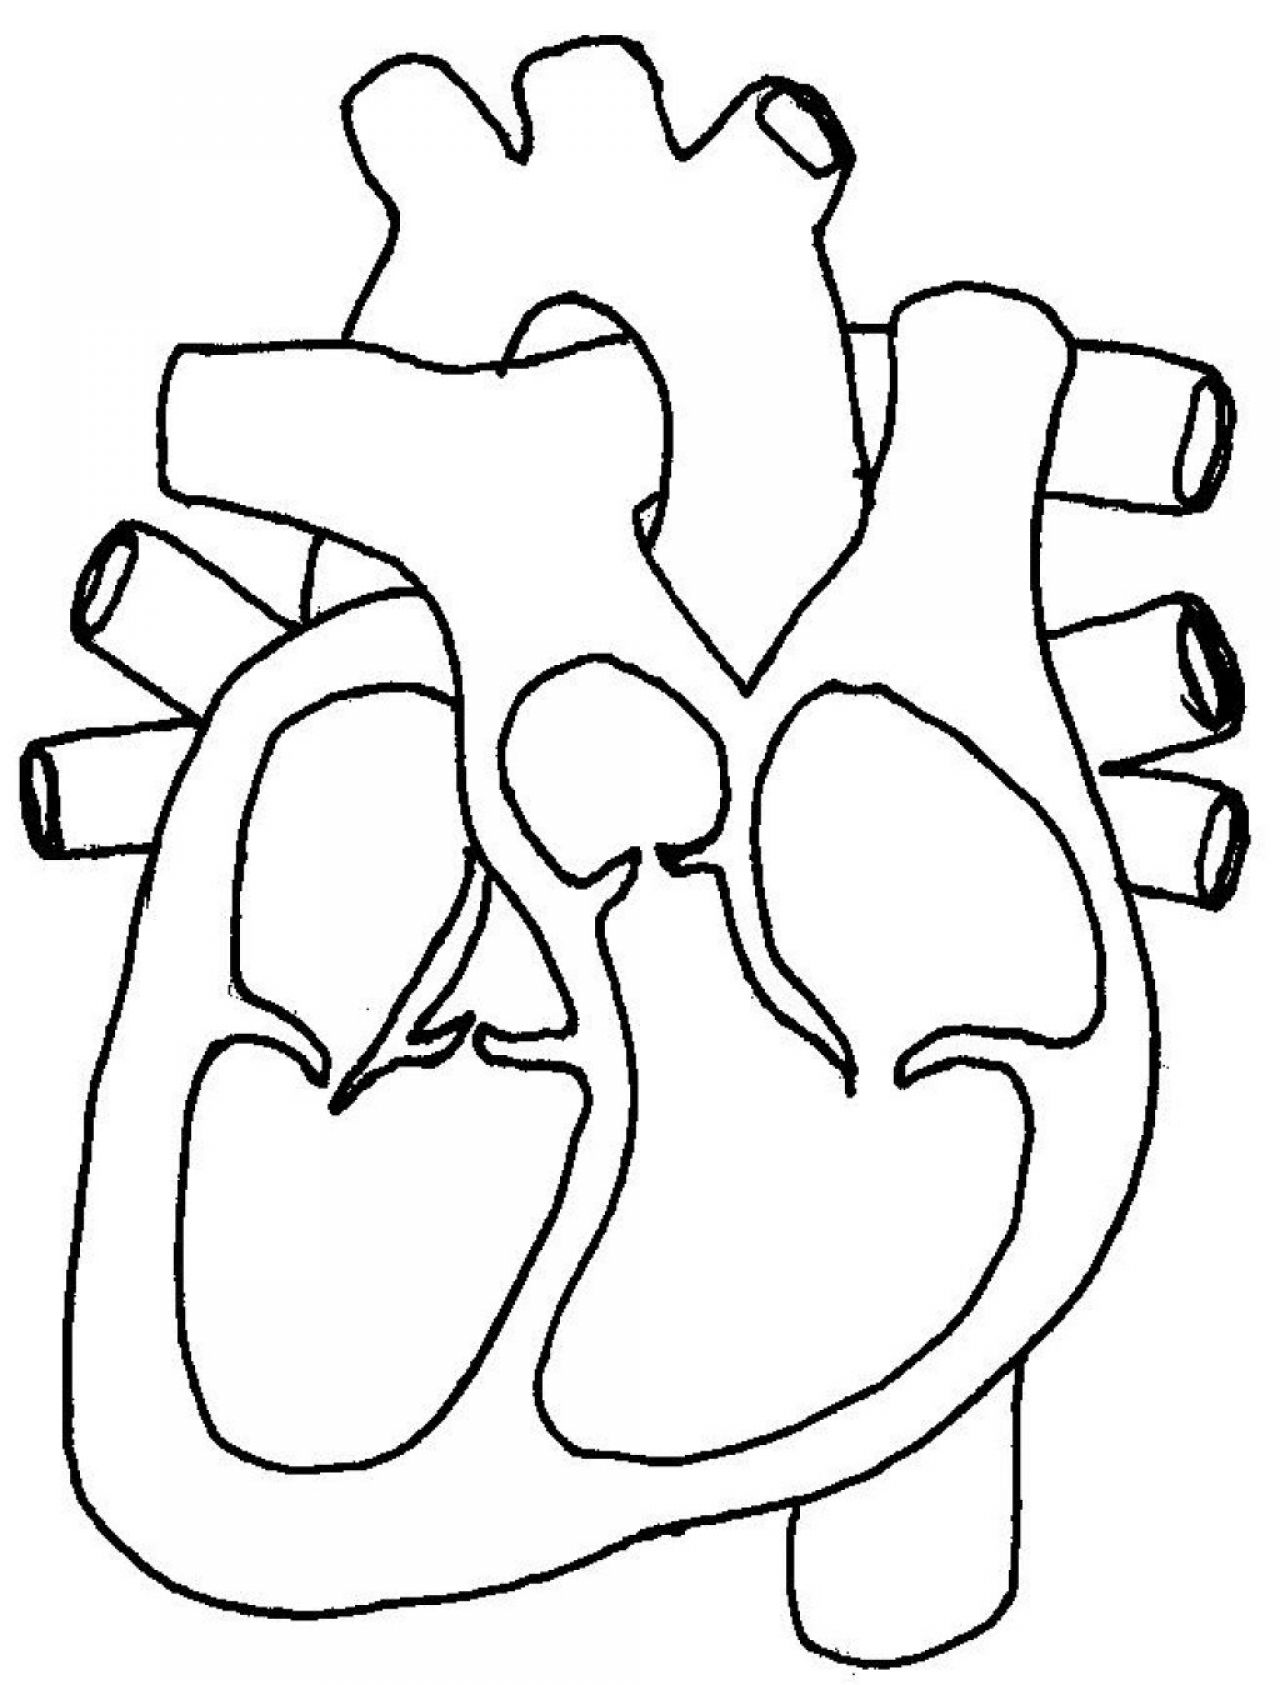 Circulatory System Diagram Human Anatomy Body Blank Heart